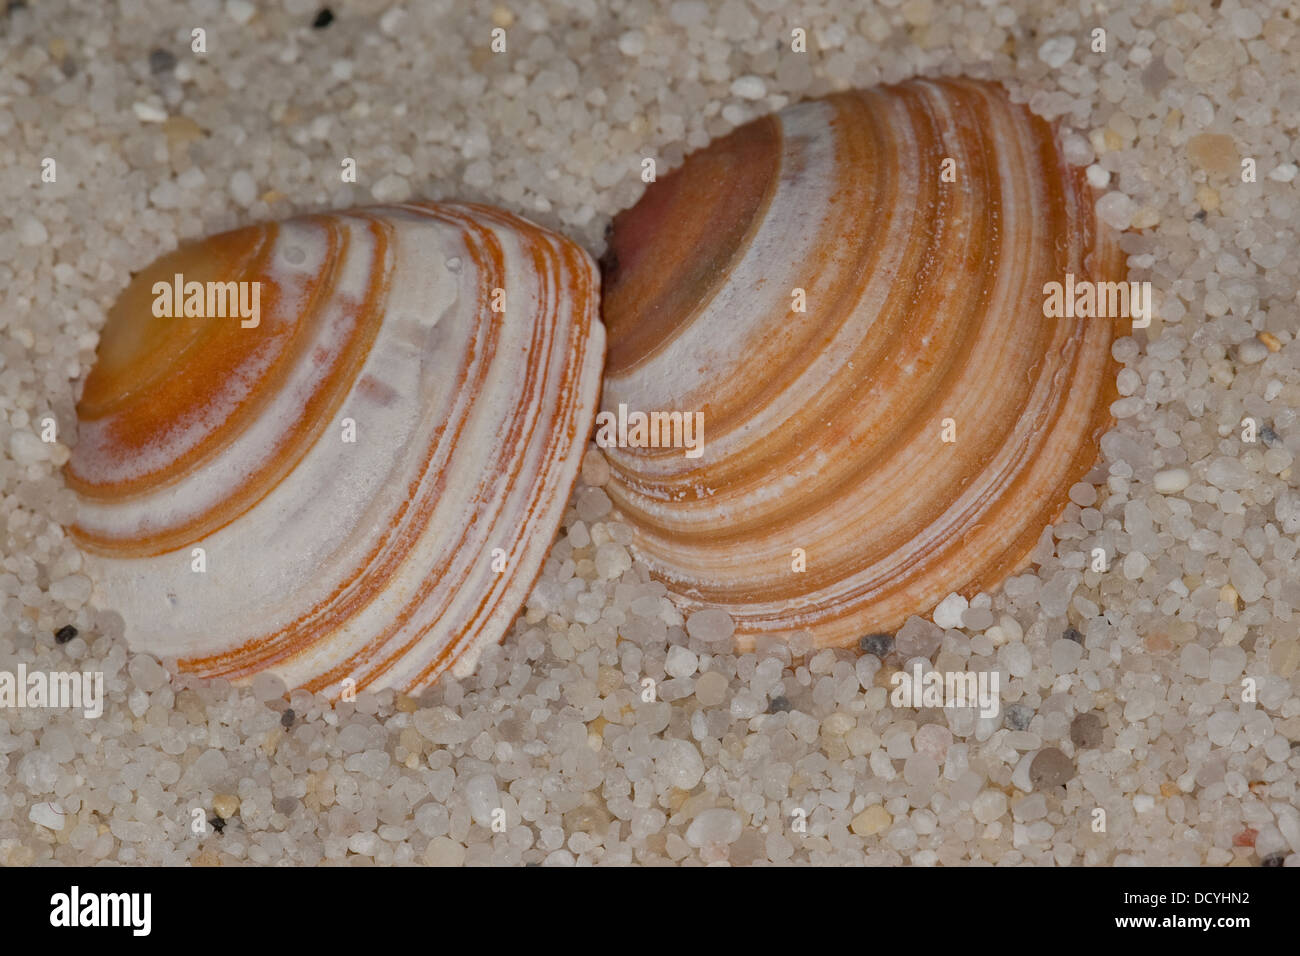 Baltic macoma, Baltic clam, Baltic tellin, Baltische Plattmuschel, Tellmuschel, Rote Bohne, Macoma balthica, Macoma baltica Stock Photo